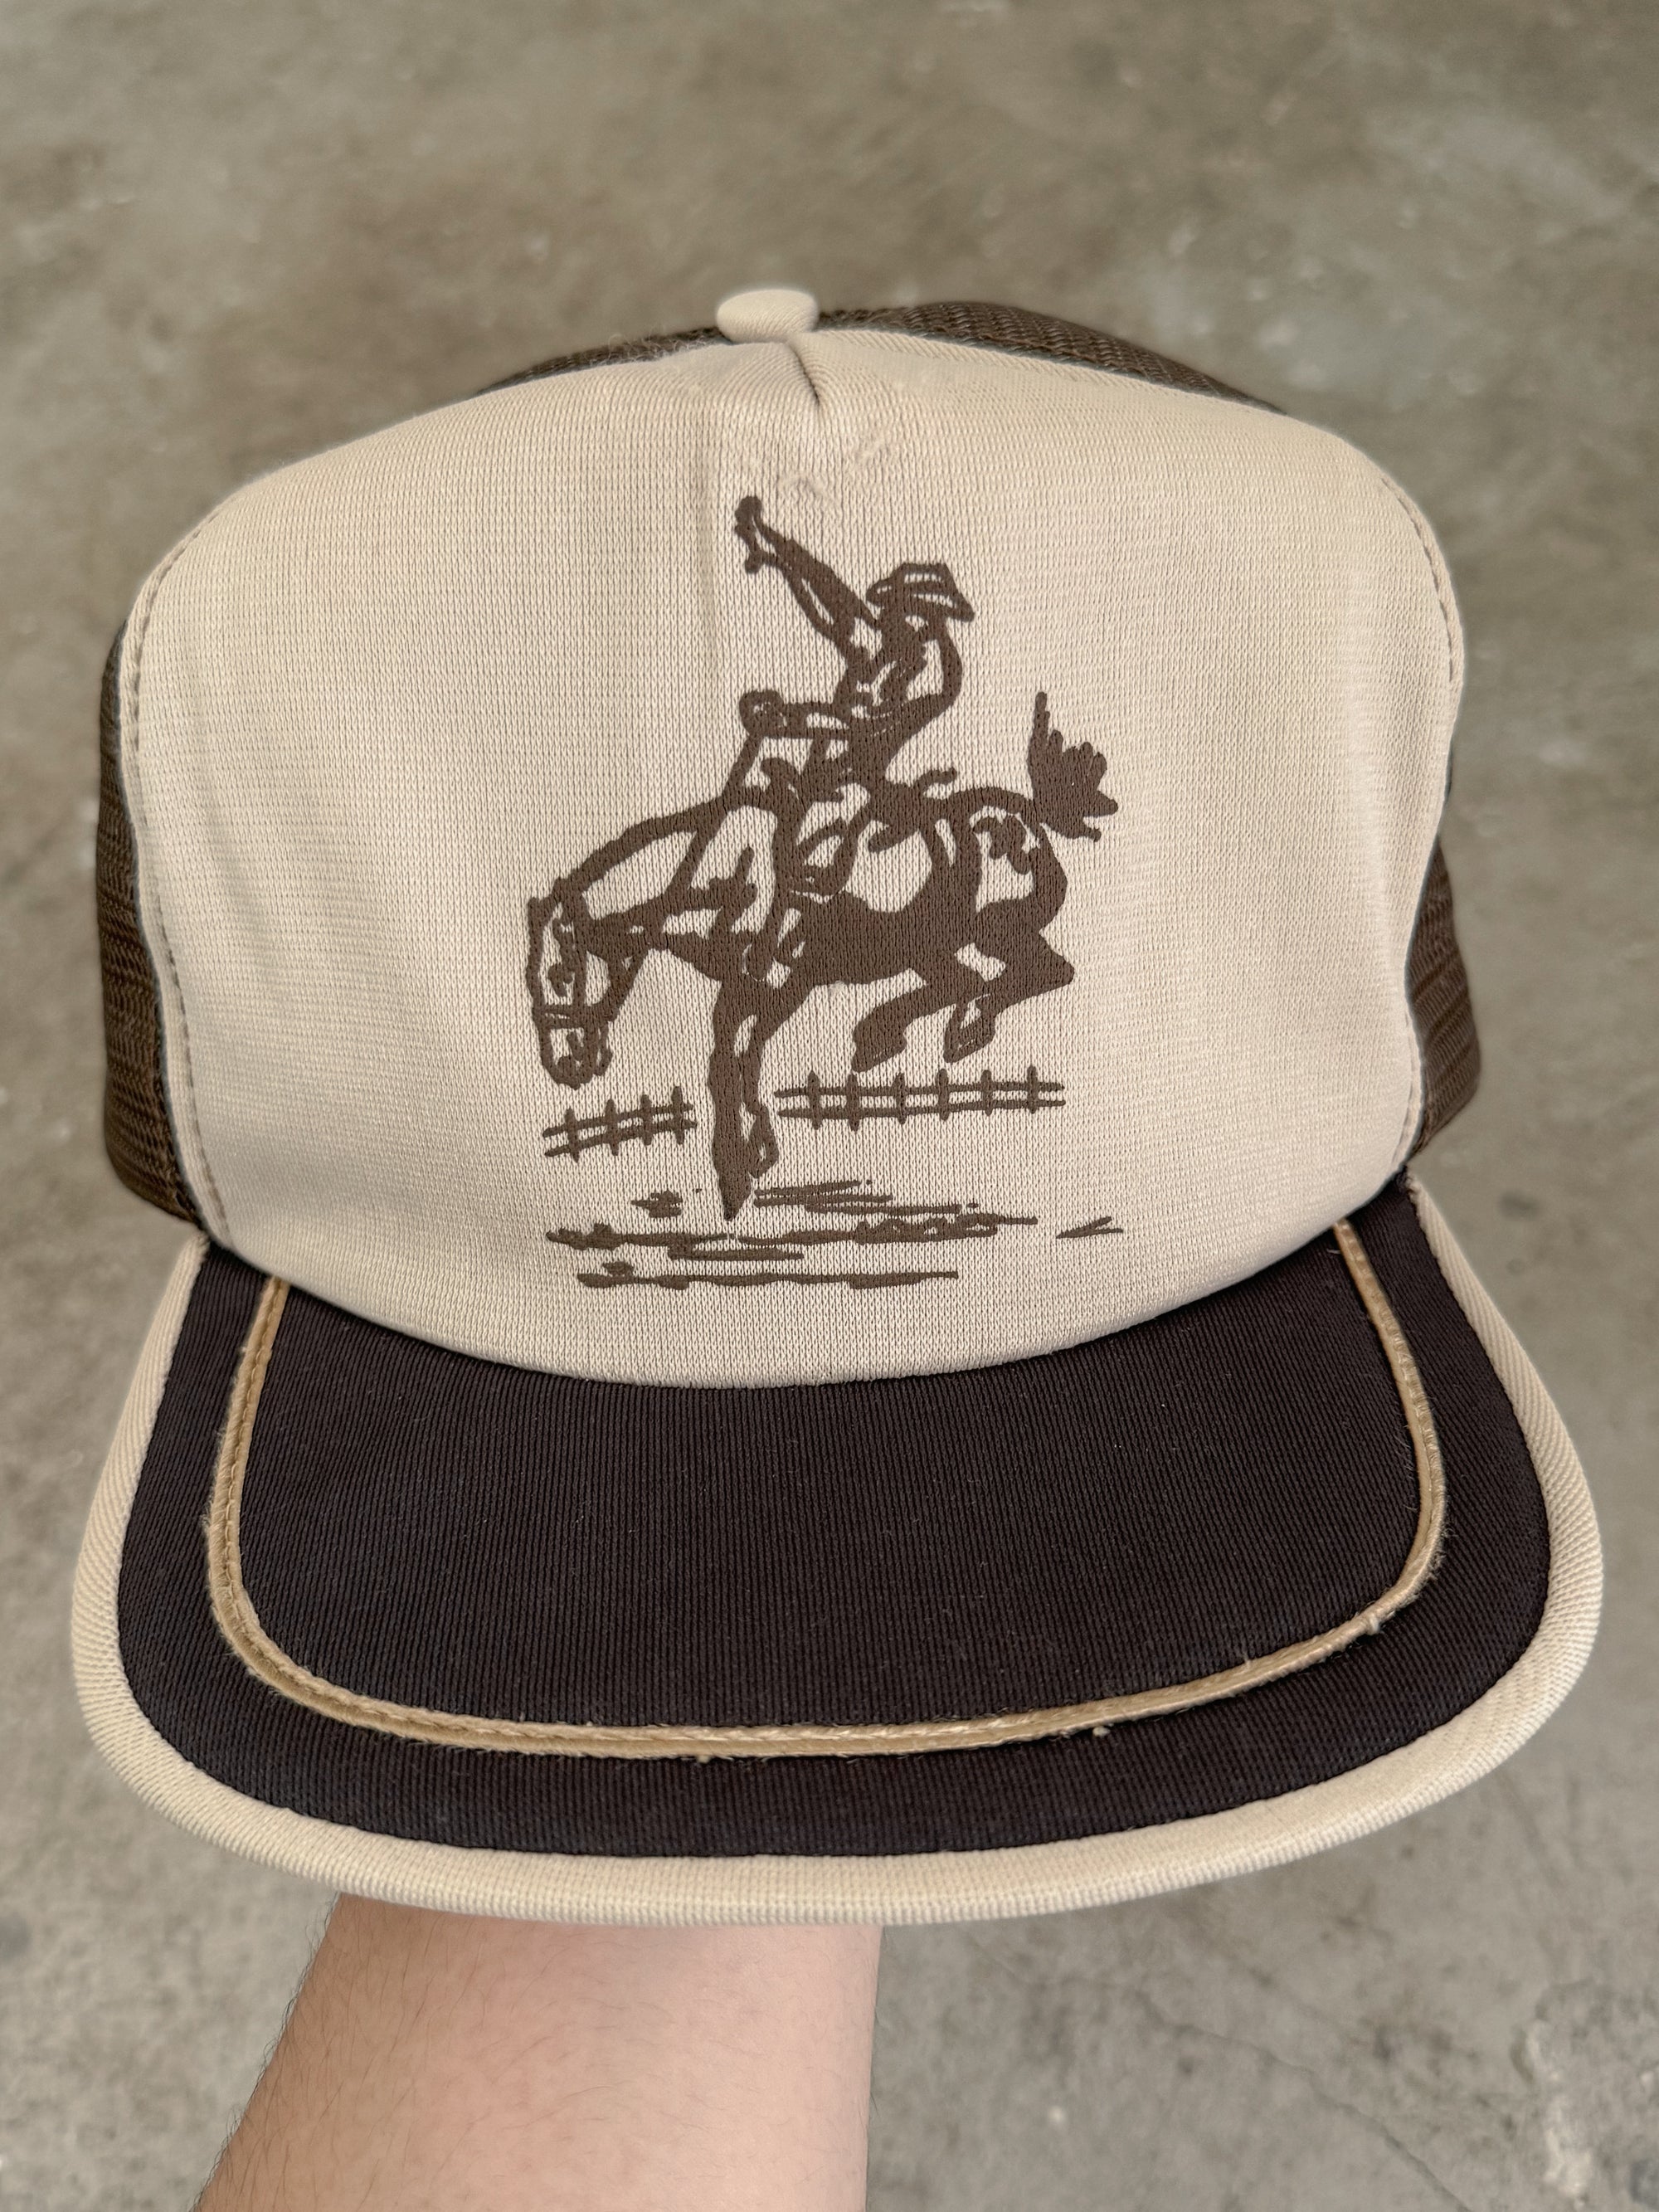 1980s "Buckaroo Cowboy" Trucker Hat